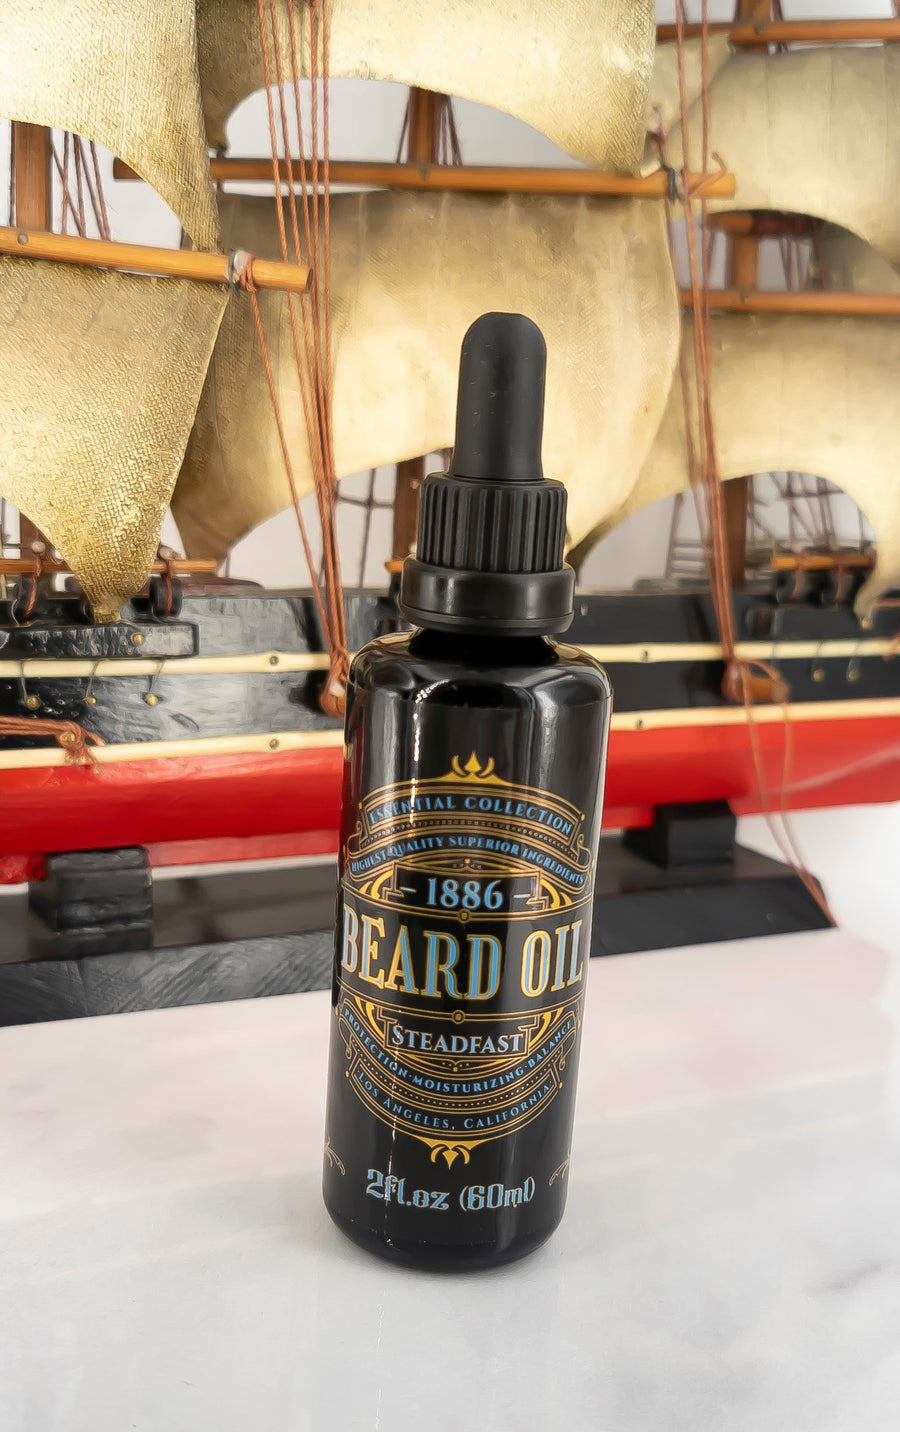 Beard Oil - Steadfast